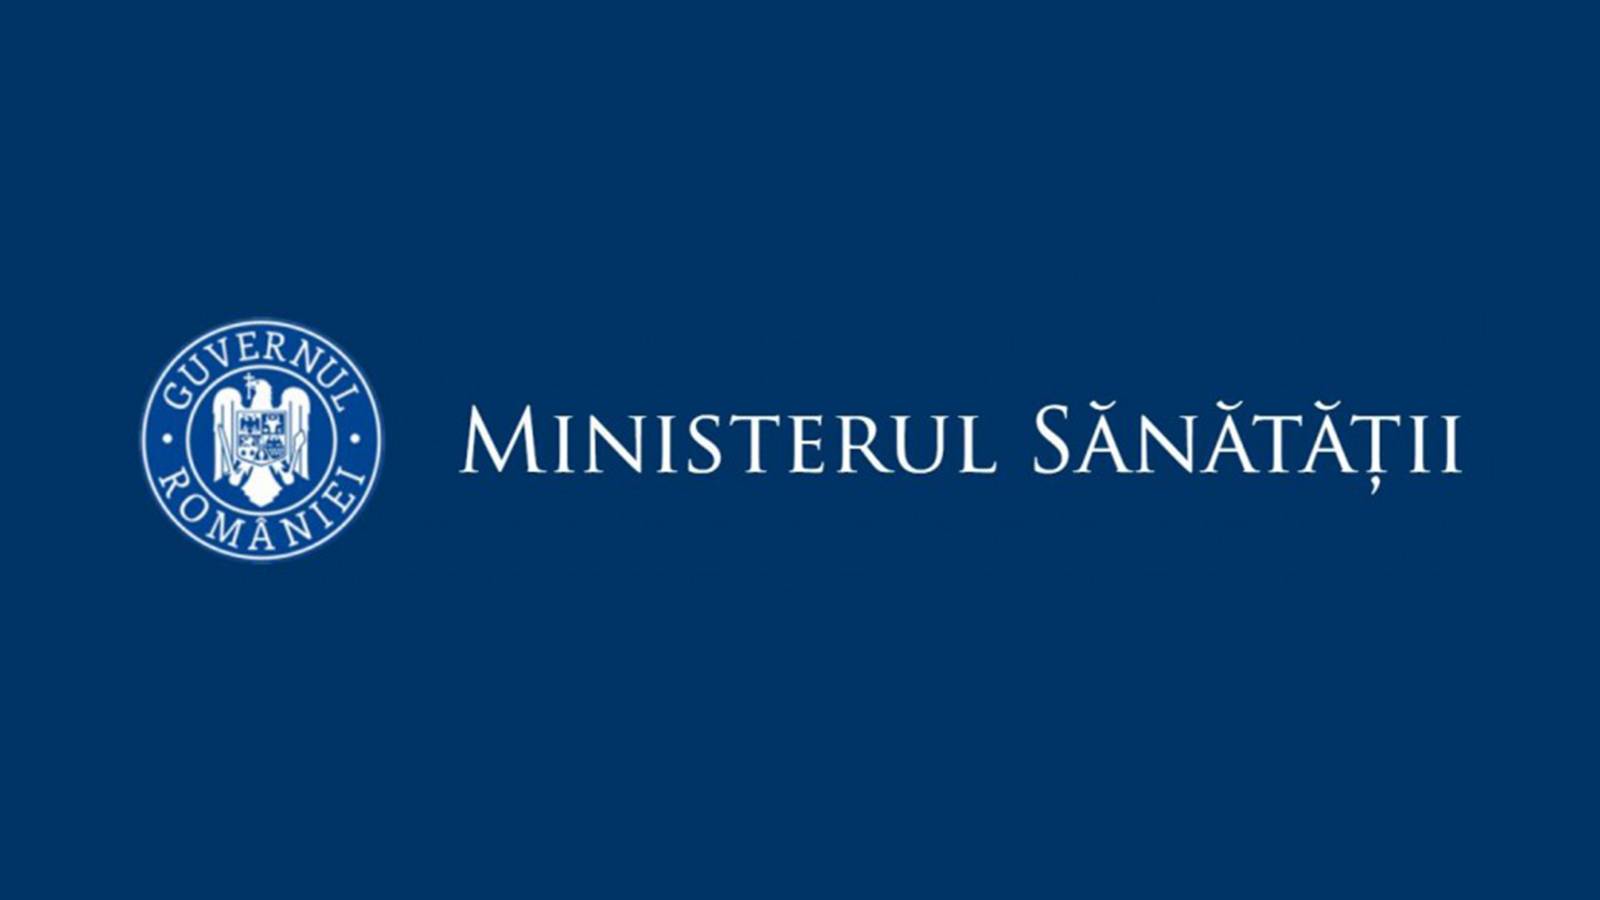 Ministerul Sanatatii oprire raspandire